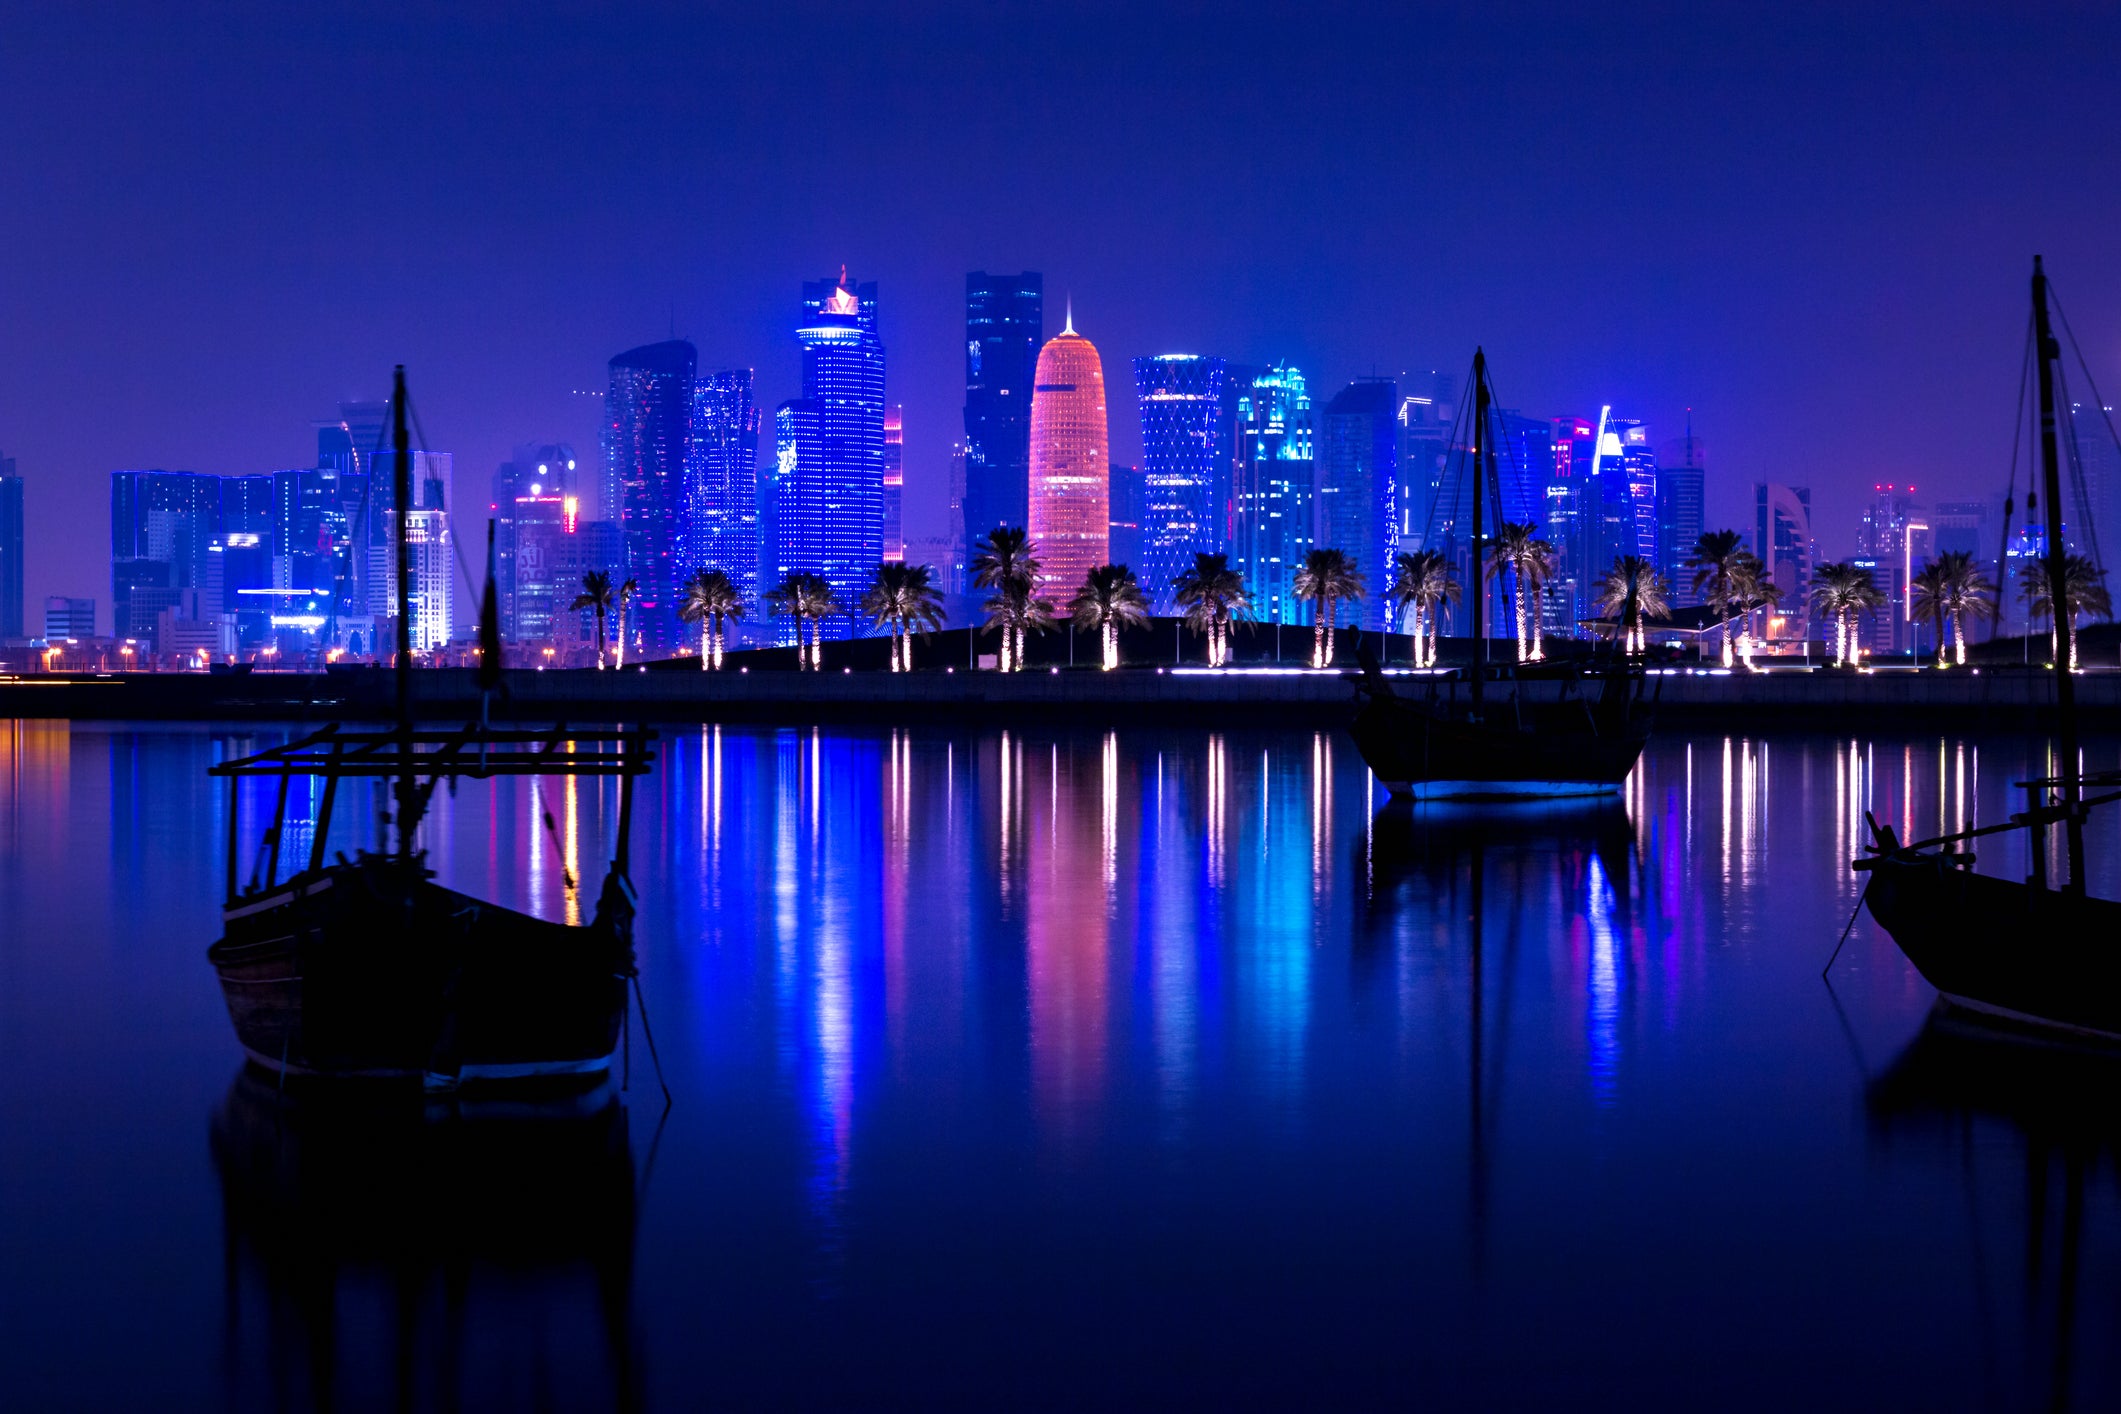 The illuminated skyline of Doha